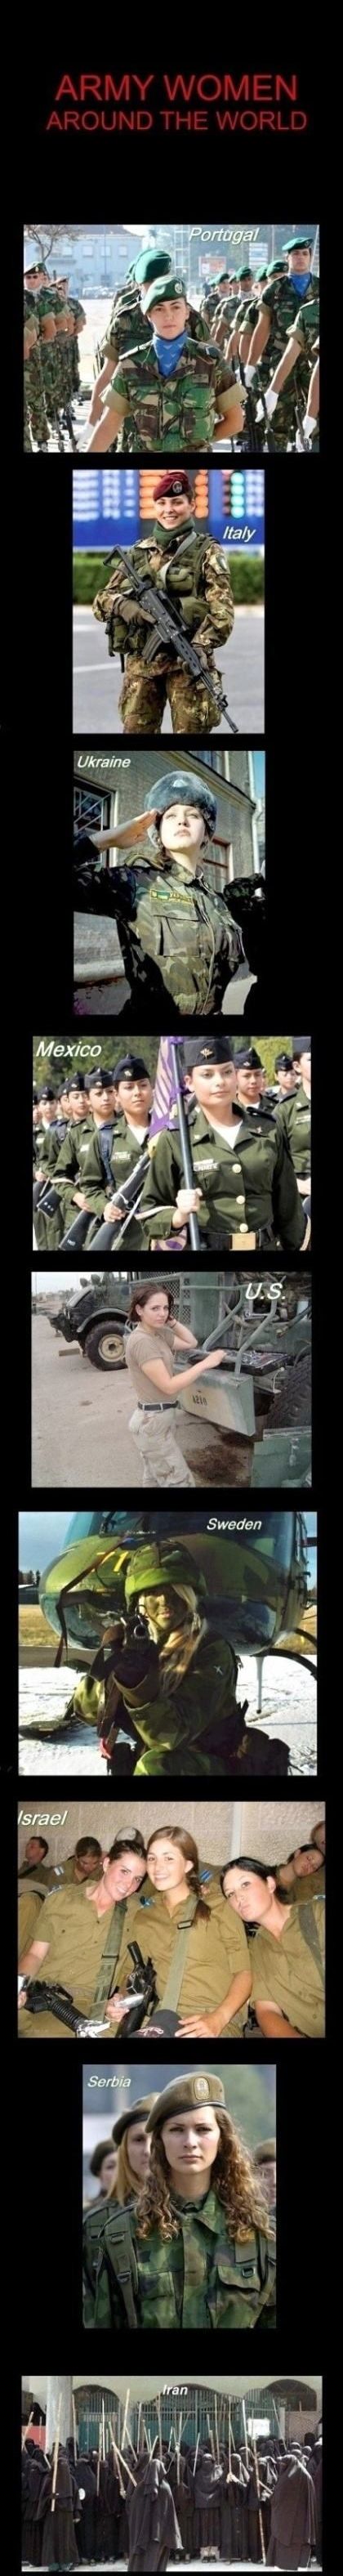 ARMY WOMEN AROUND THE WORLD